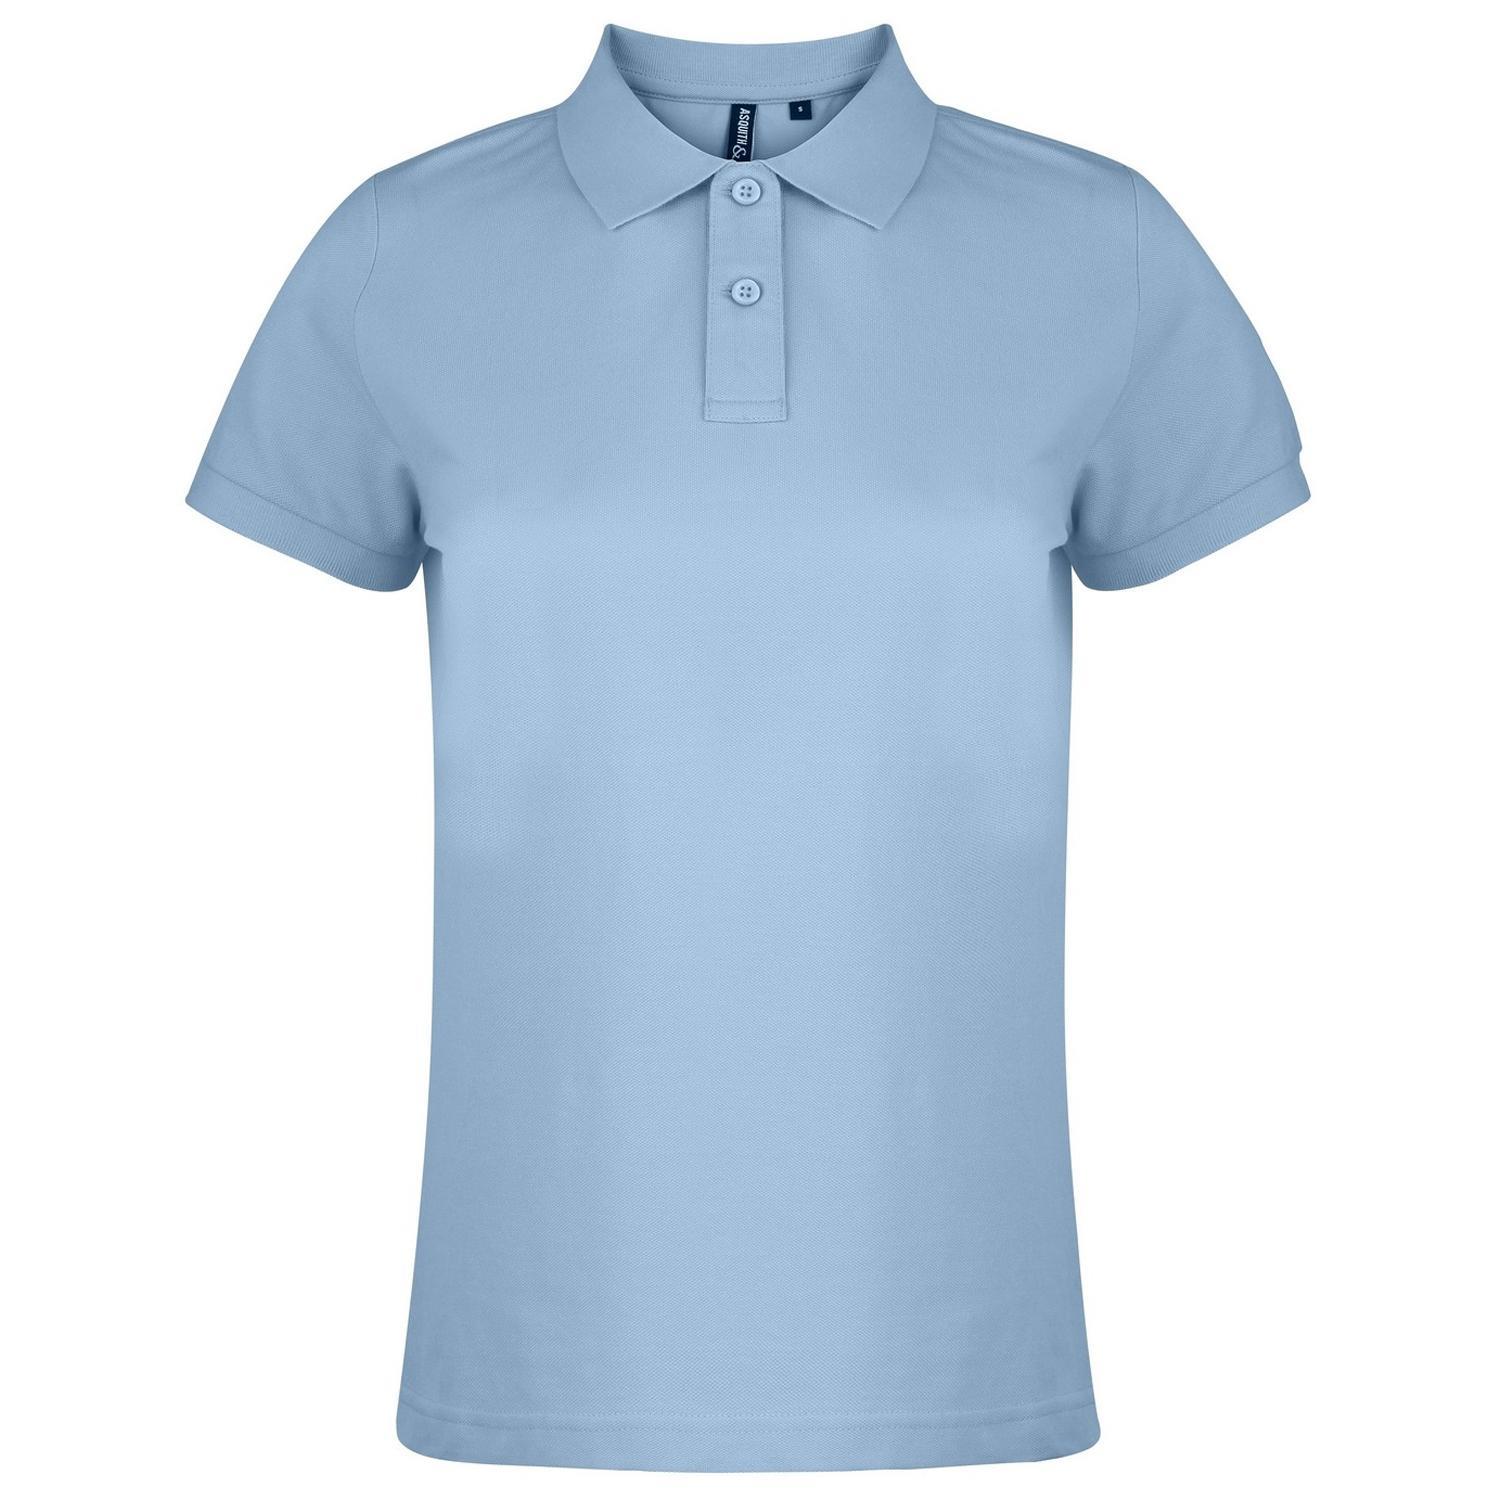 Asquith & Fox Womens/Ladies Plain Short Sleeve Polo Shirt (Sky) (XL)